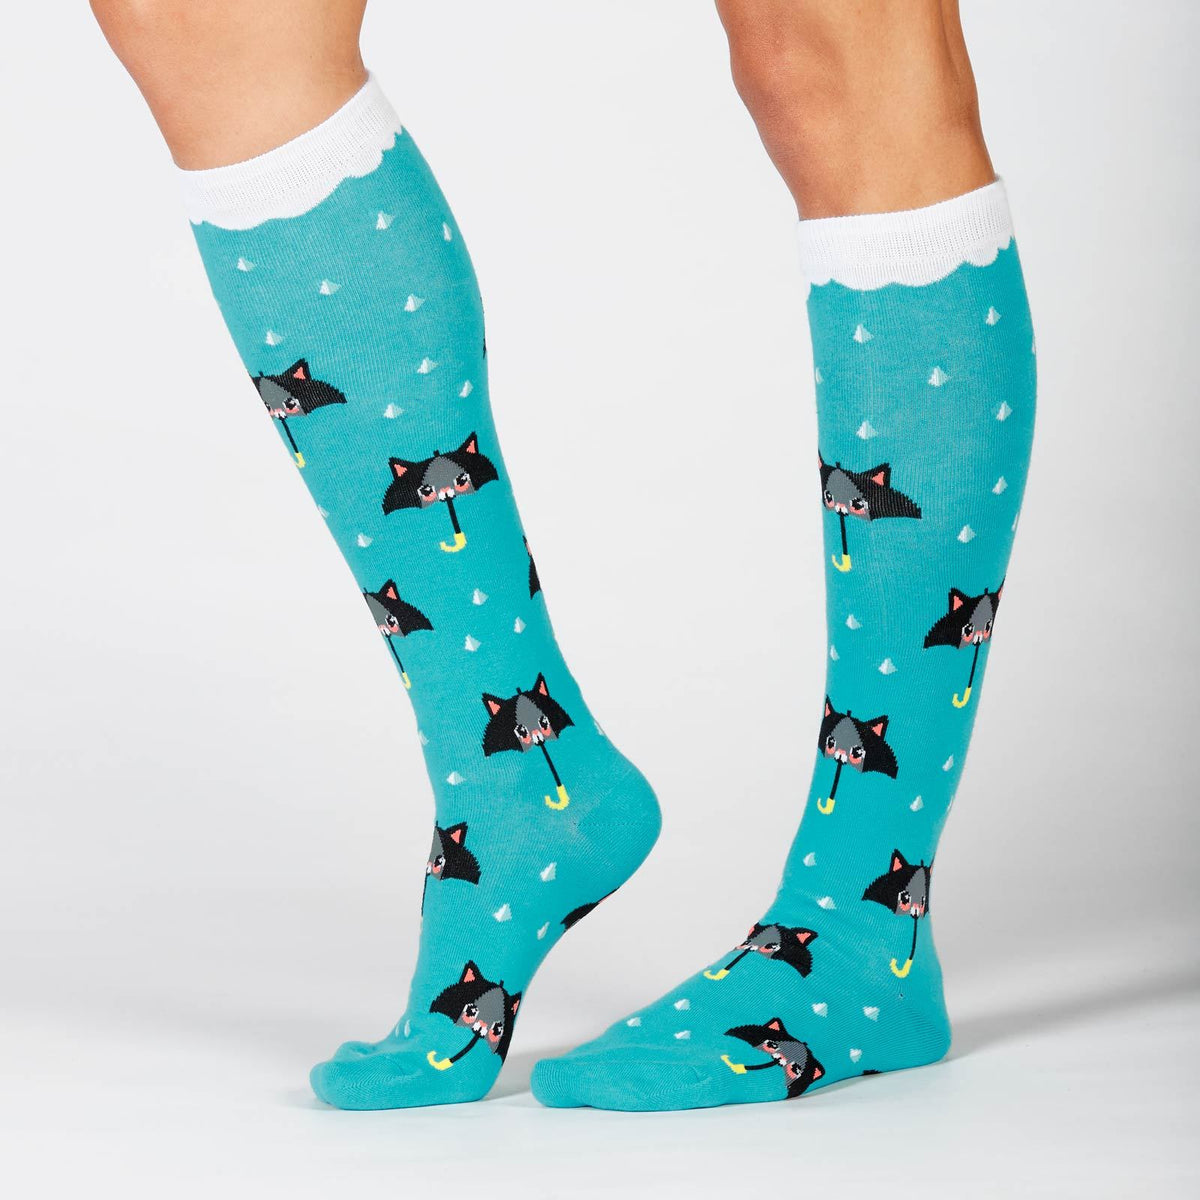 50% Chance of Cats Socks Women&#39;s Knee High Sock blue